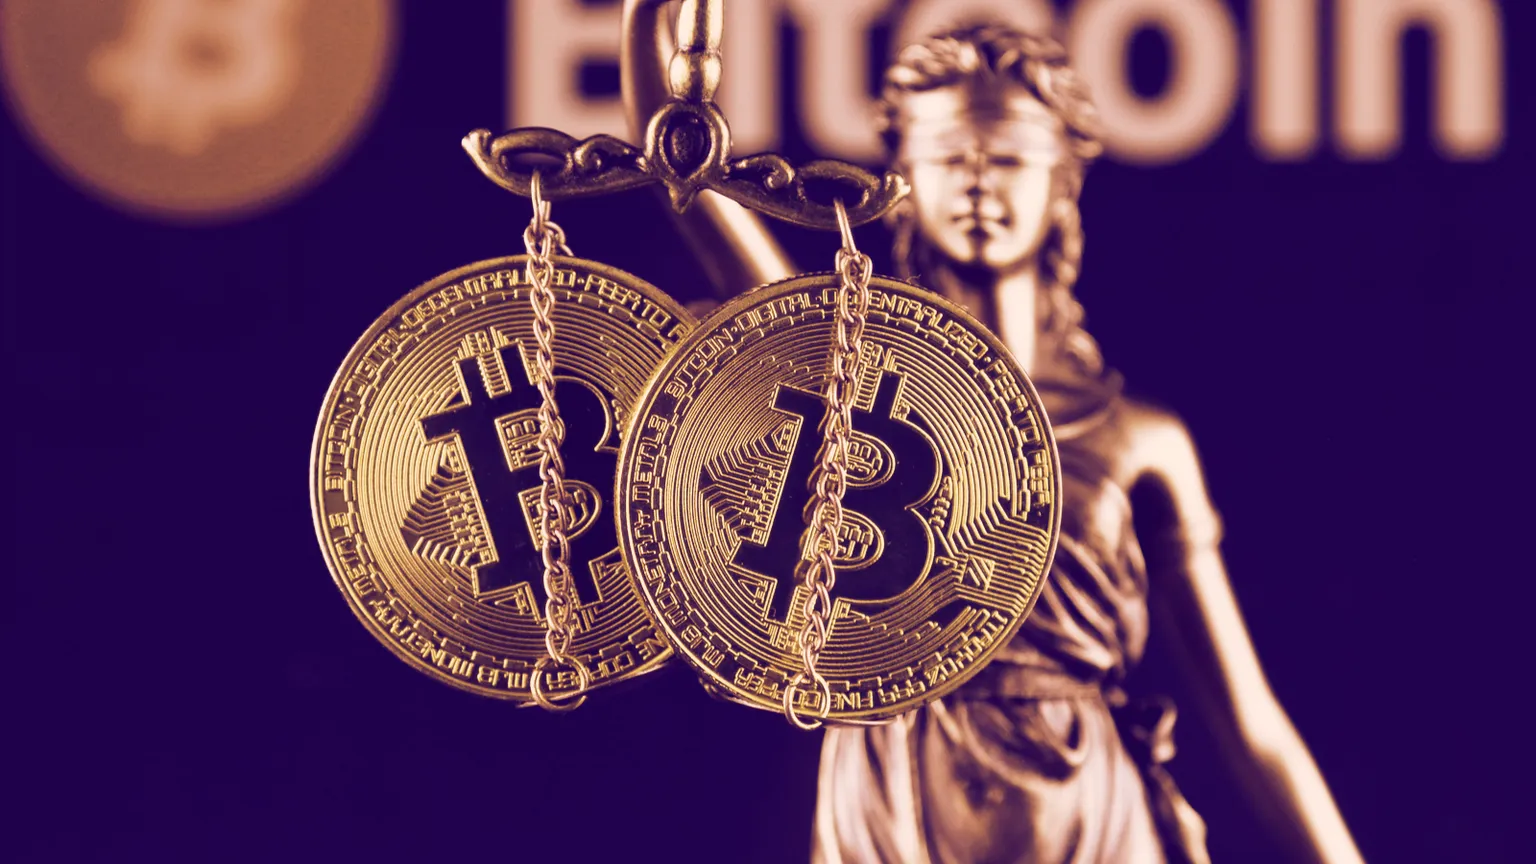 Alexander Vinnik supuestamente blanqueó 4 mil millones de dólares en Bitcoin. Imagen: Shutterstock